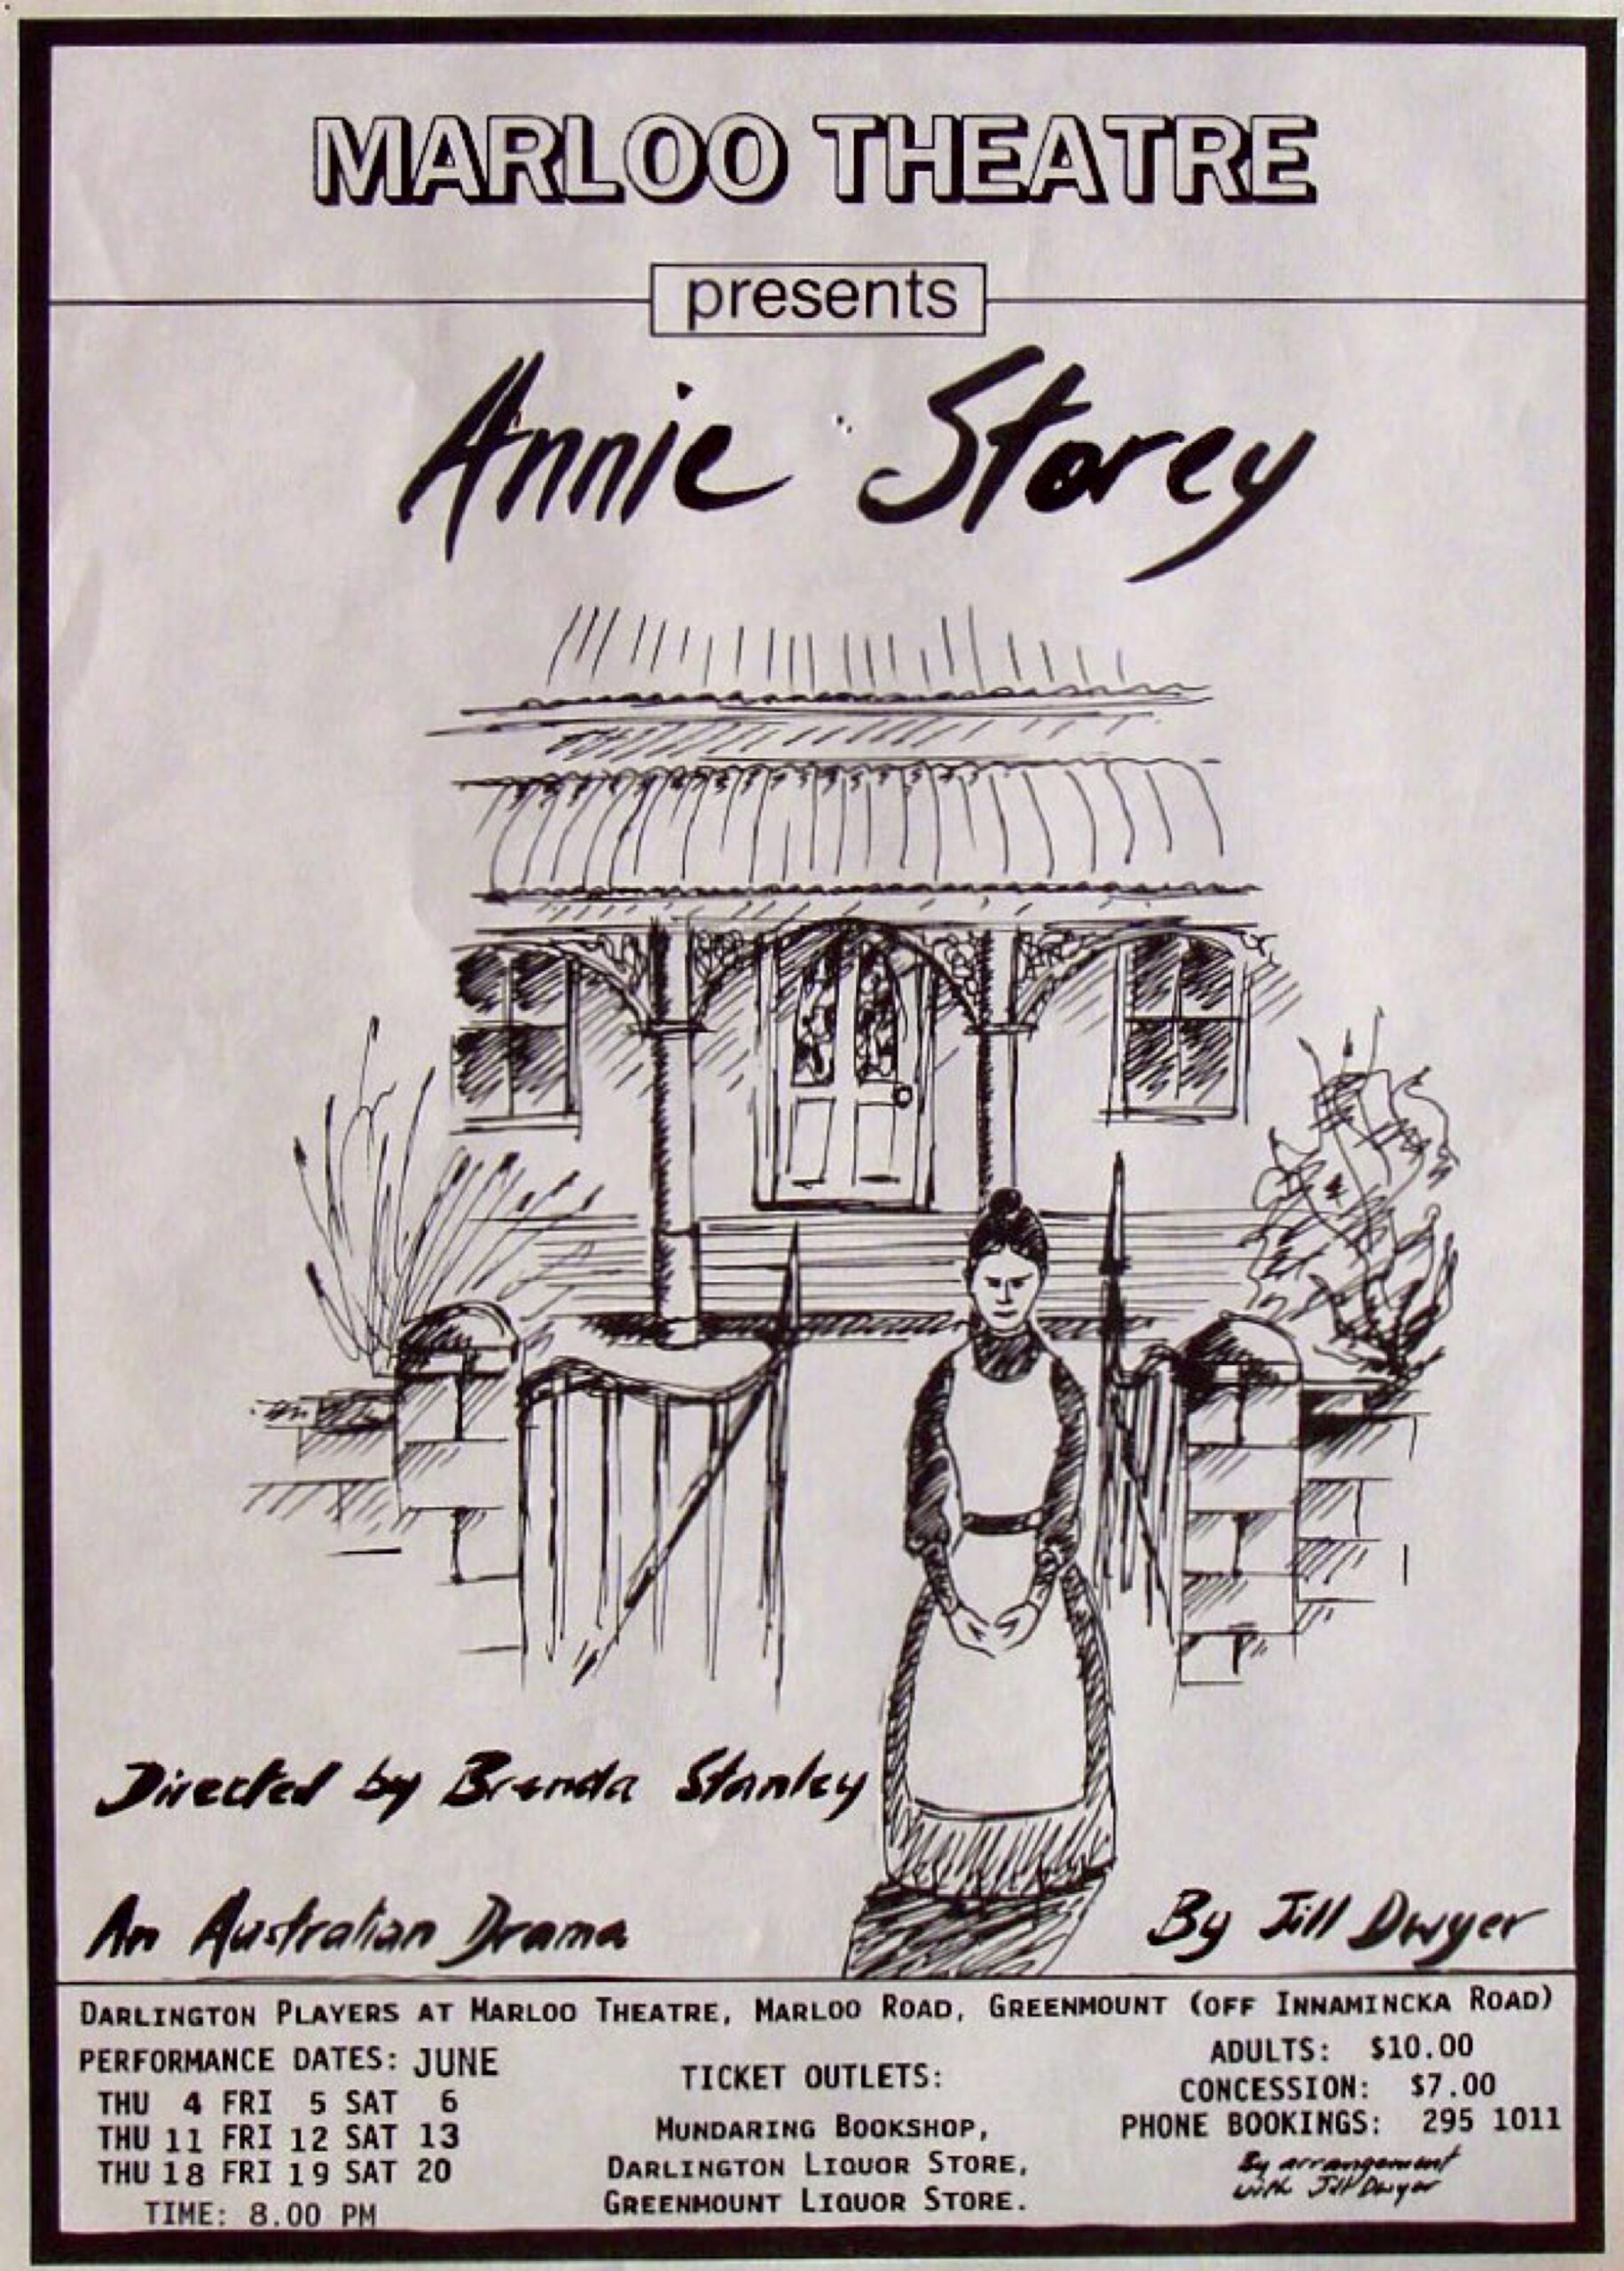 Annie Story